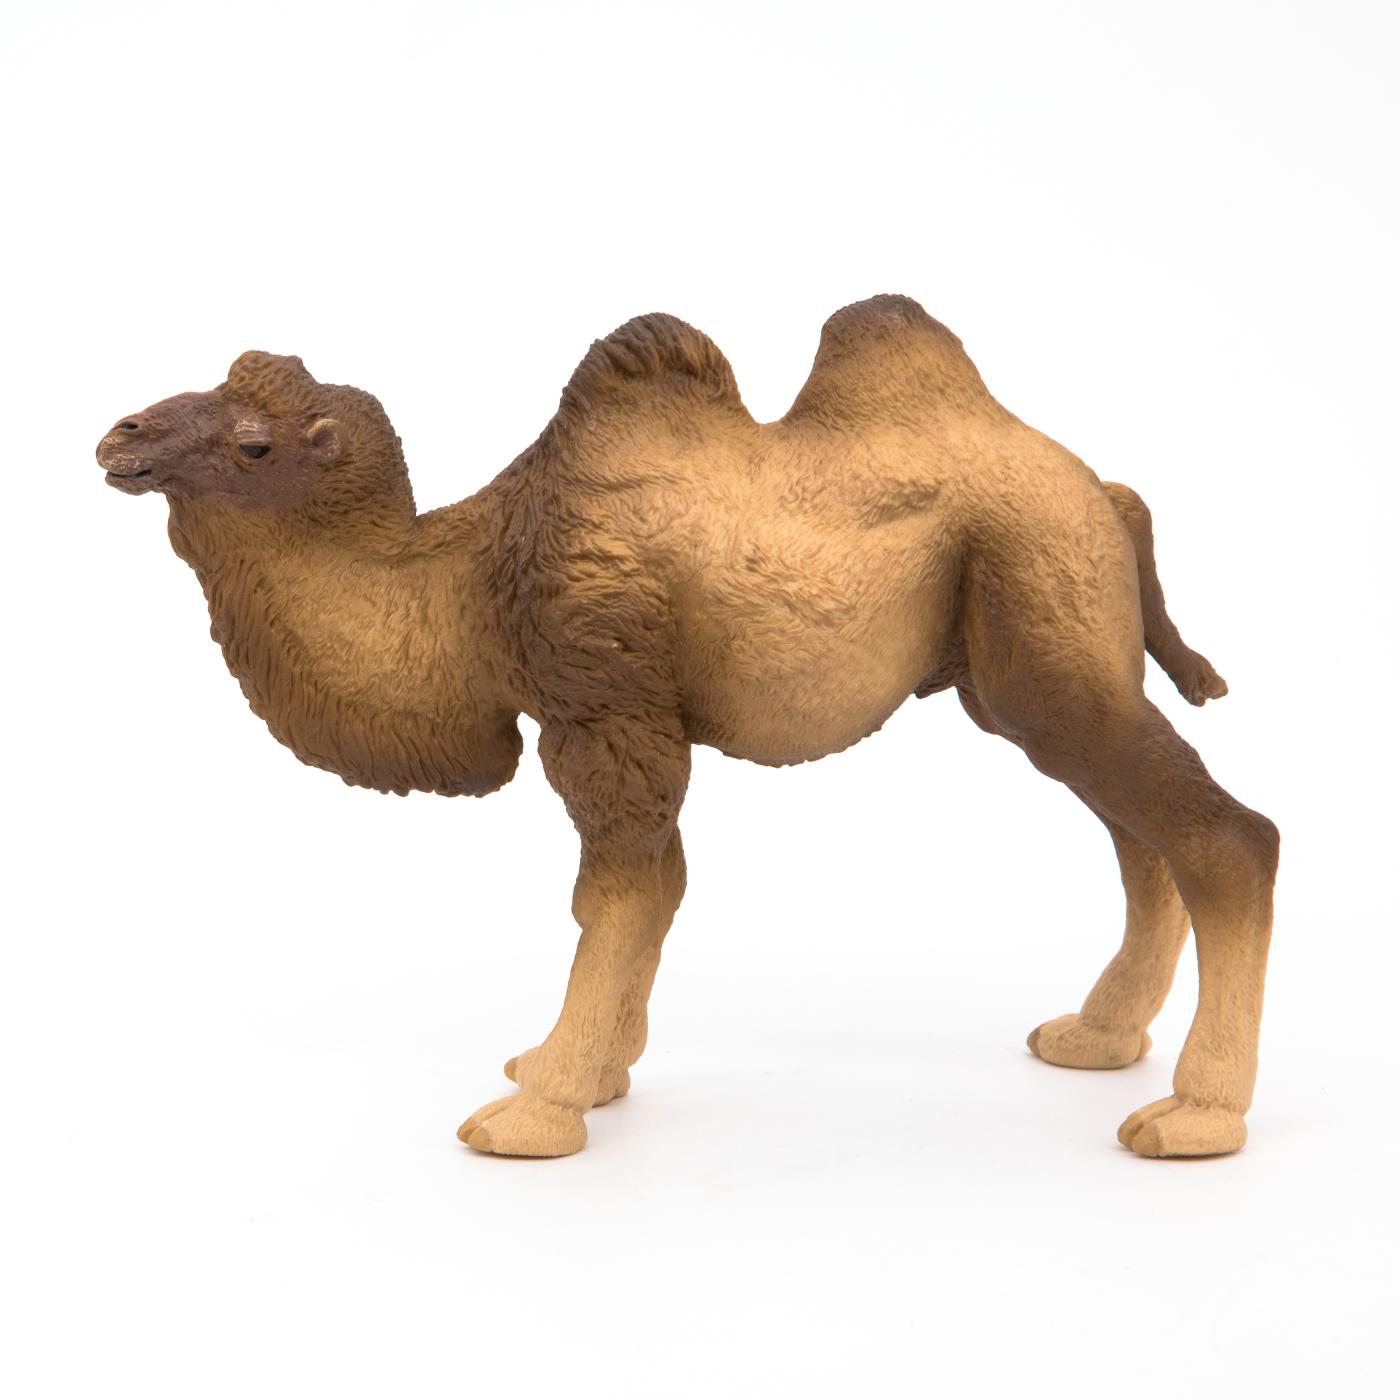 Papo 50129 "Bactrian Camel Figure 